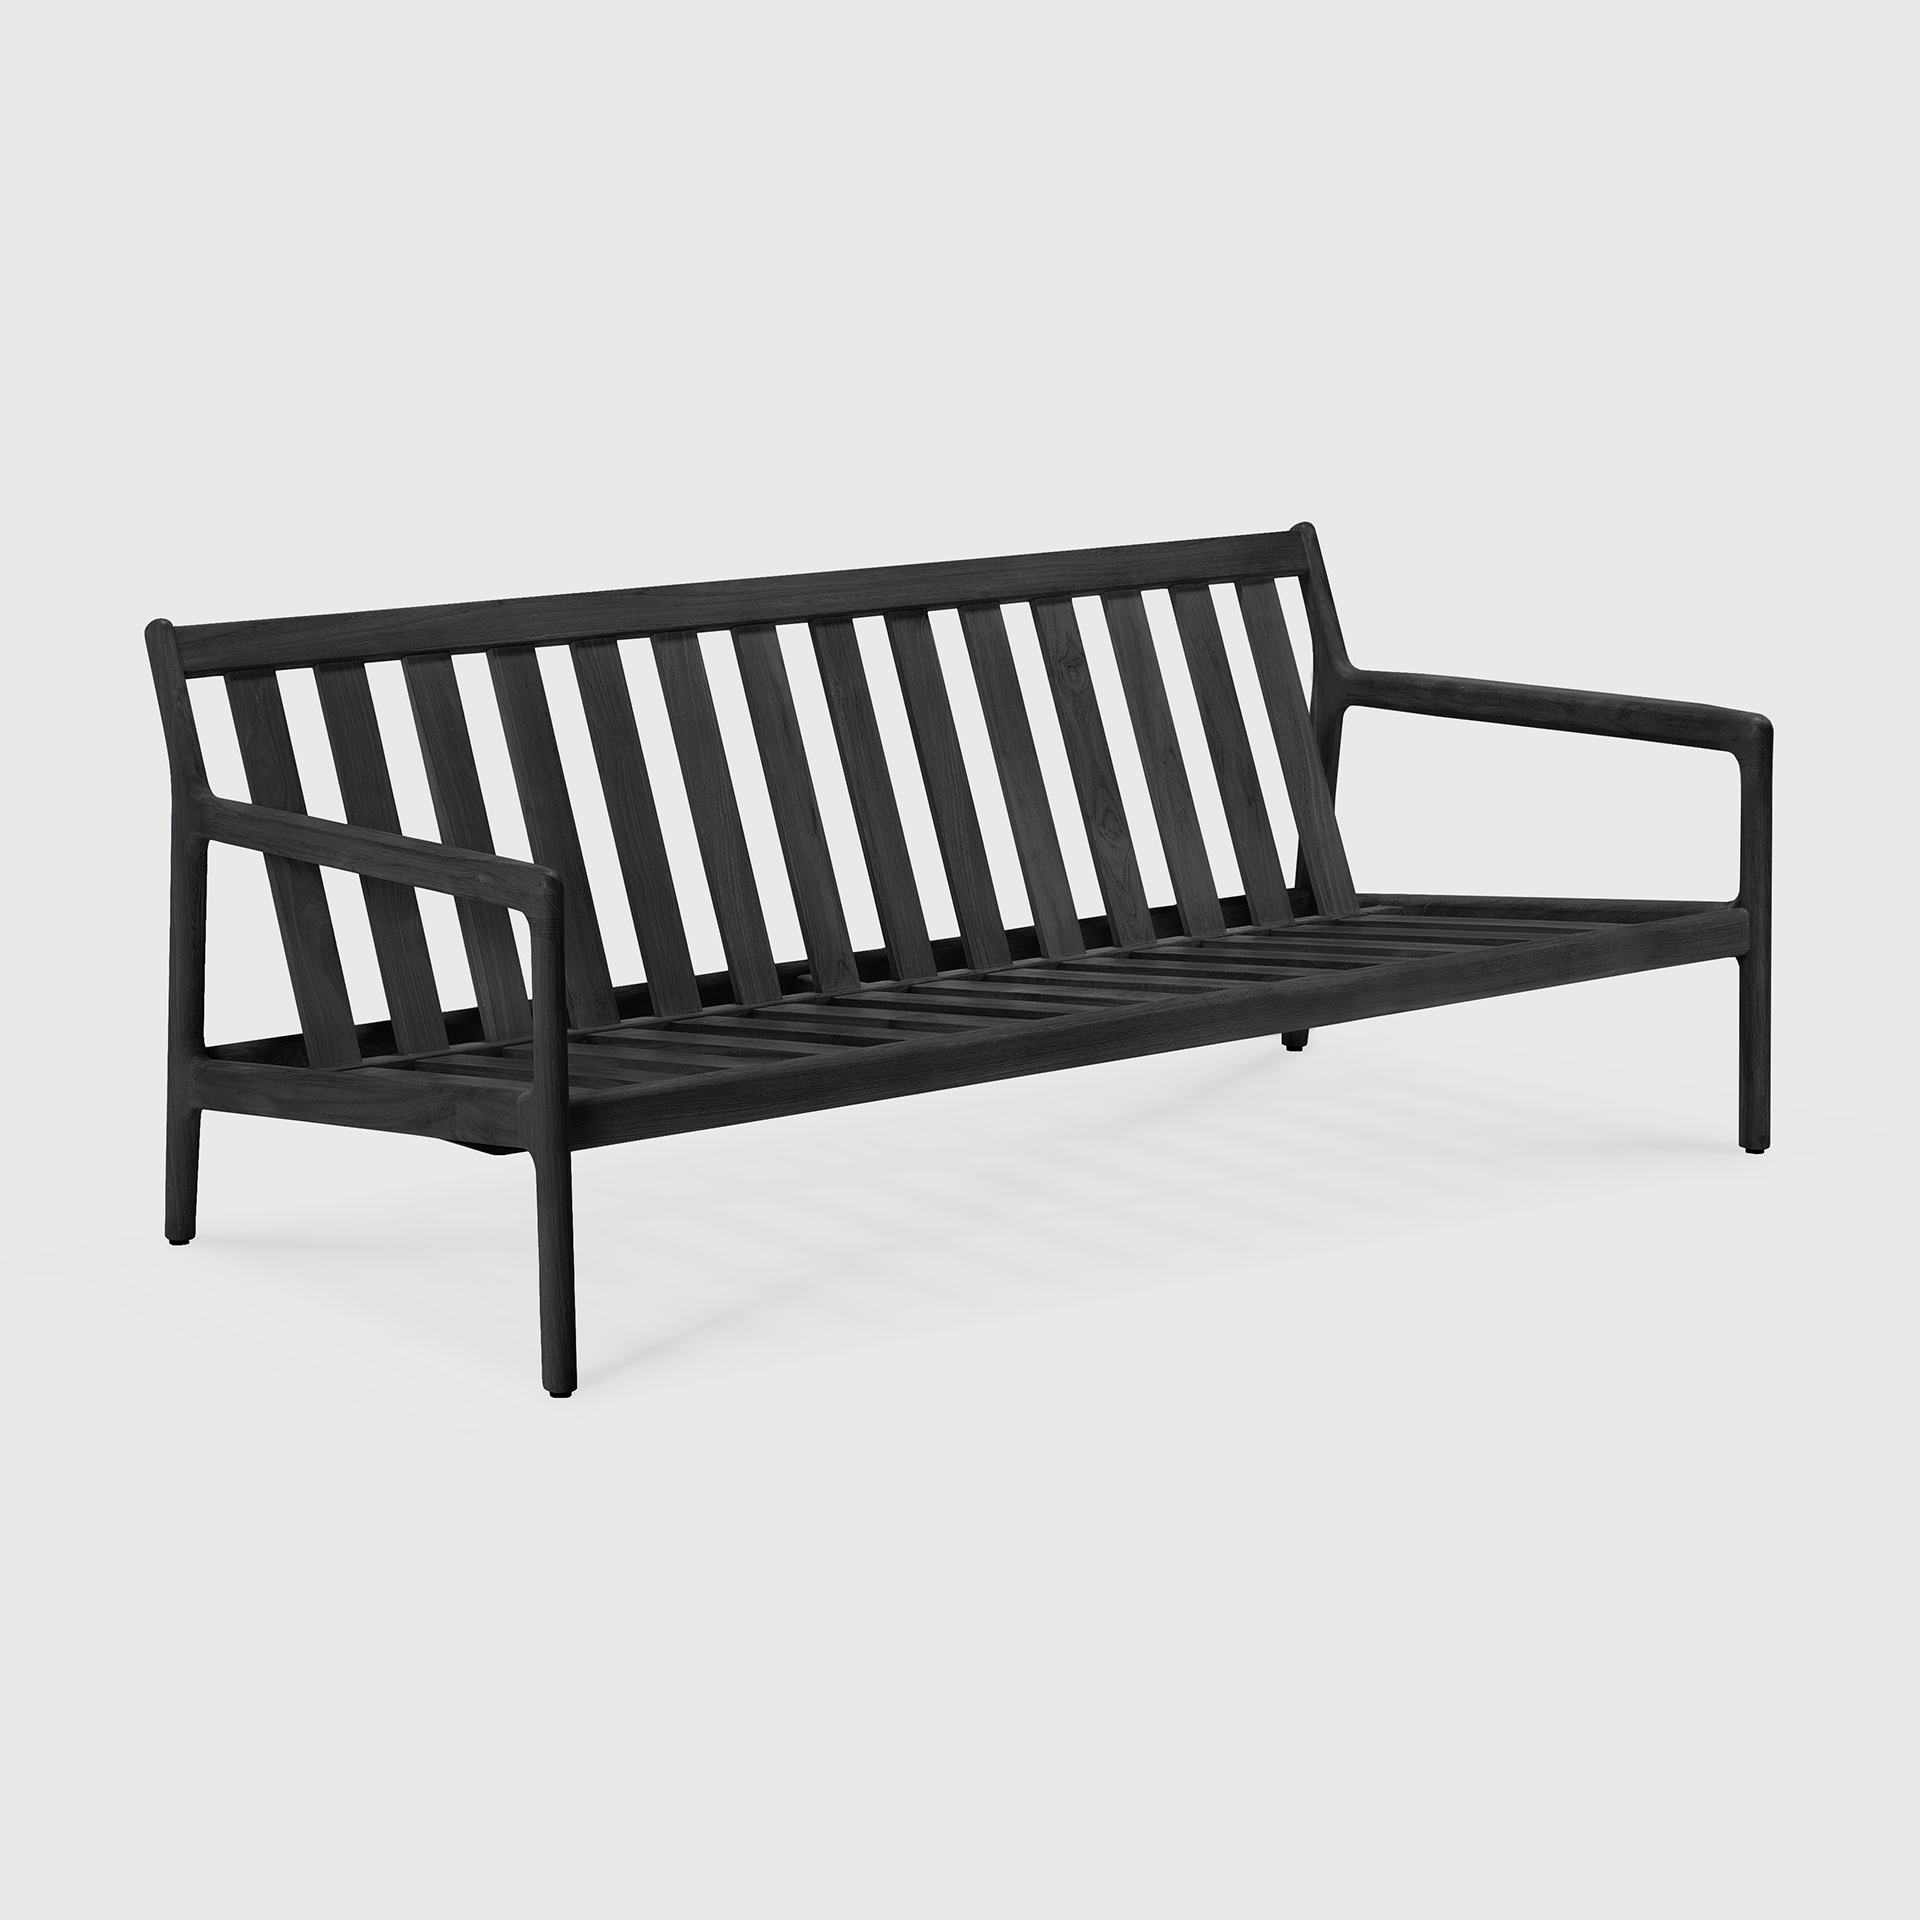 [70262] Jack outdoor sofa frame - 2 seater